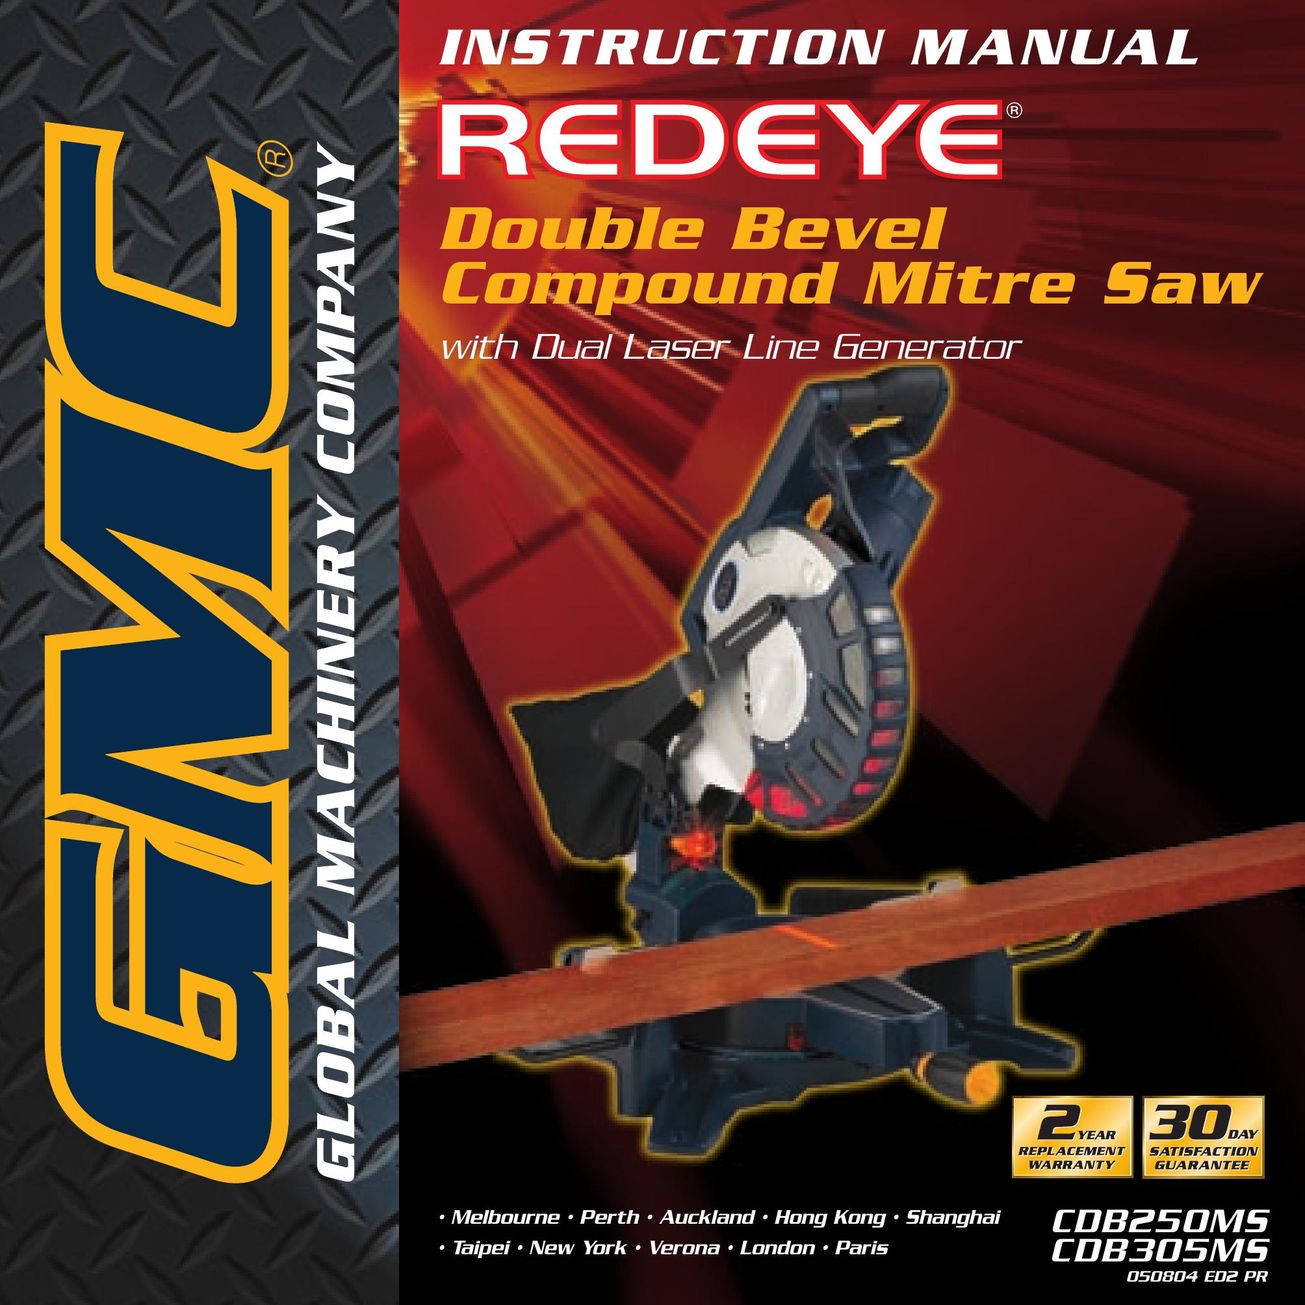 Global Machinery Company CDB250MS Saw User Manual